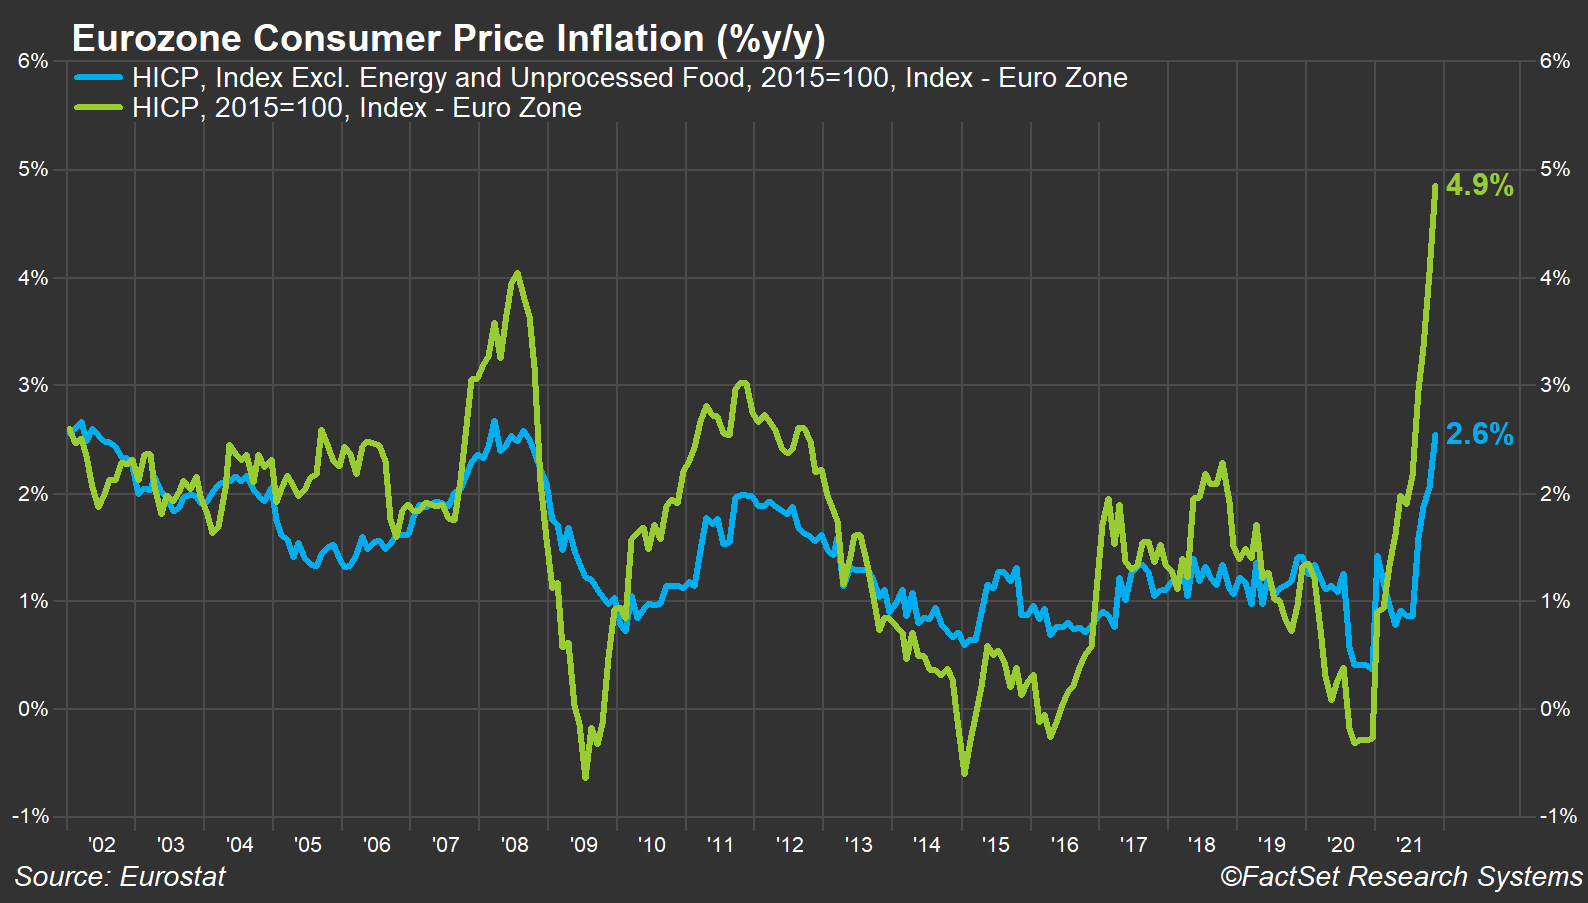 eurozone-consumer-price-inflation-hcpi